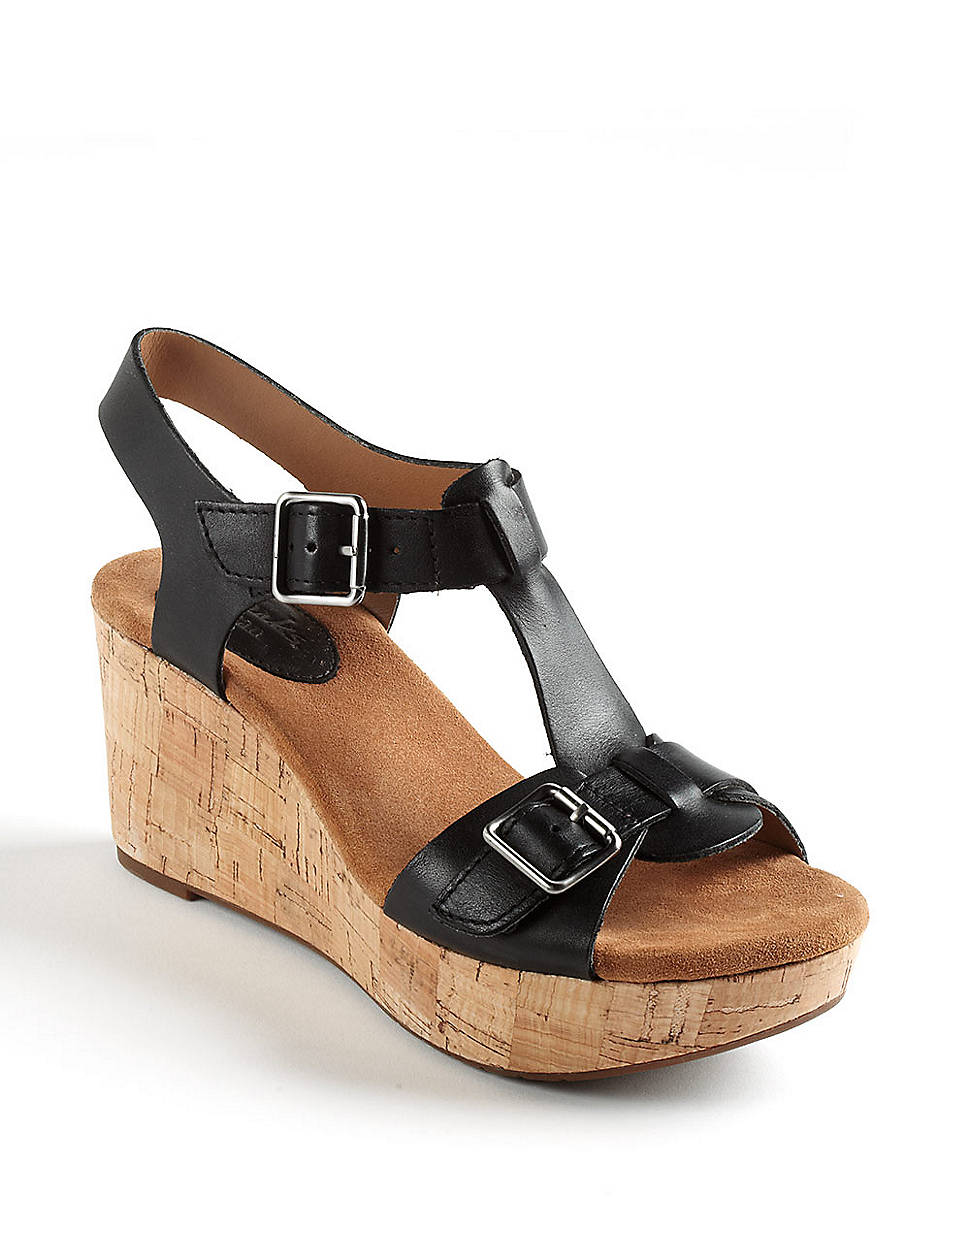 Lyst - Clarks Caslynn Paula Leather Platform Cork Wedge Sandals in Black